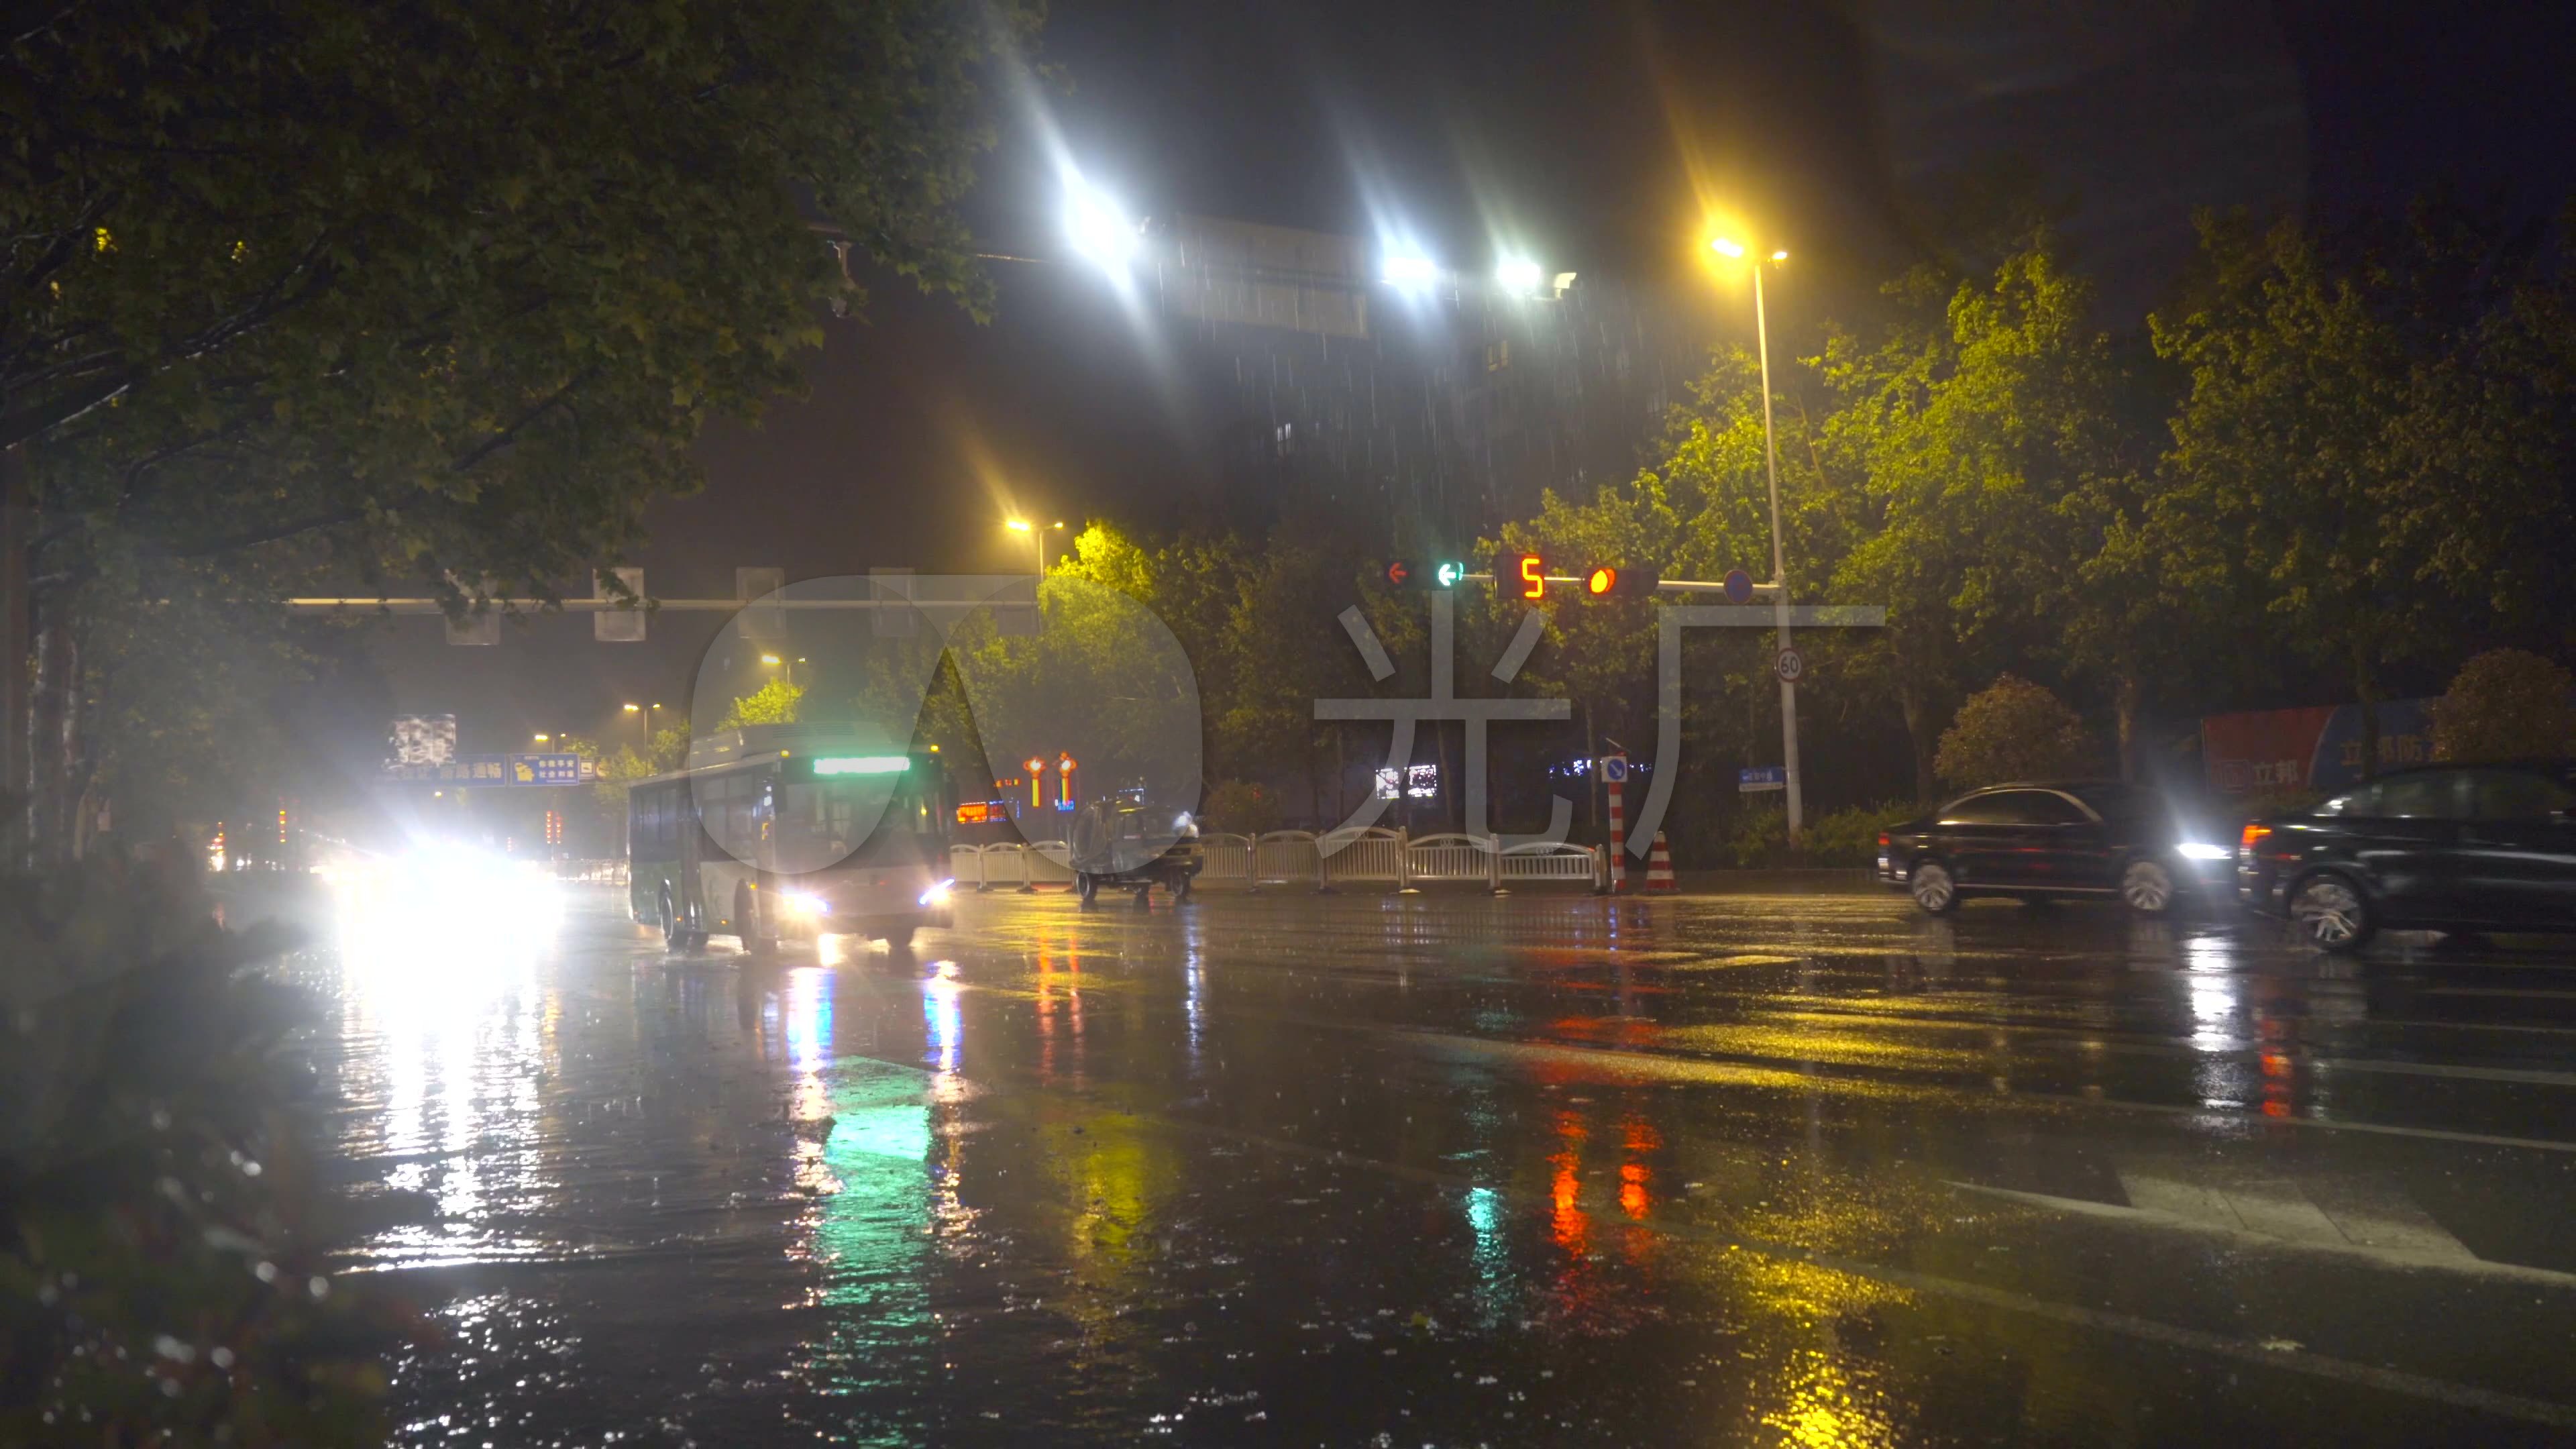 4k雨夜城市街道-夜晚下雨了_3840x2160_高清视频素材